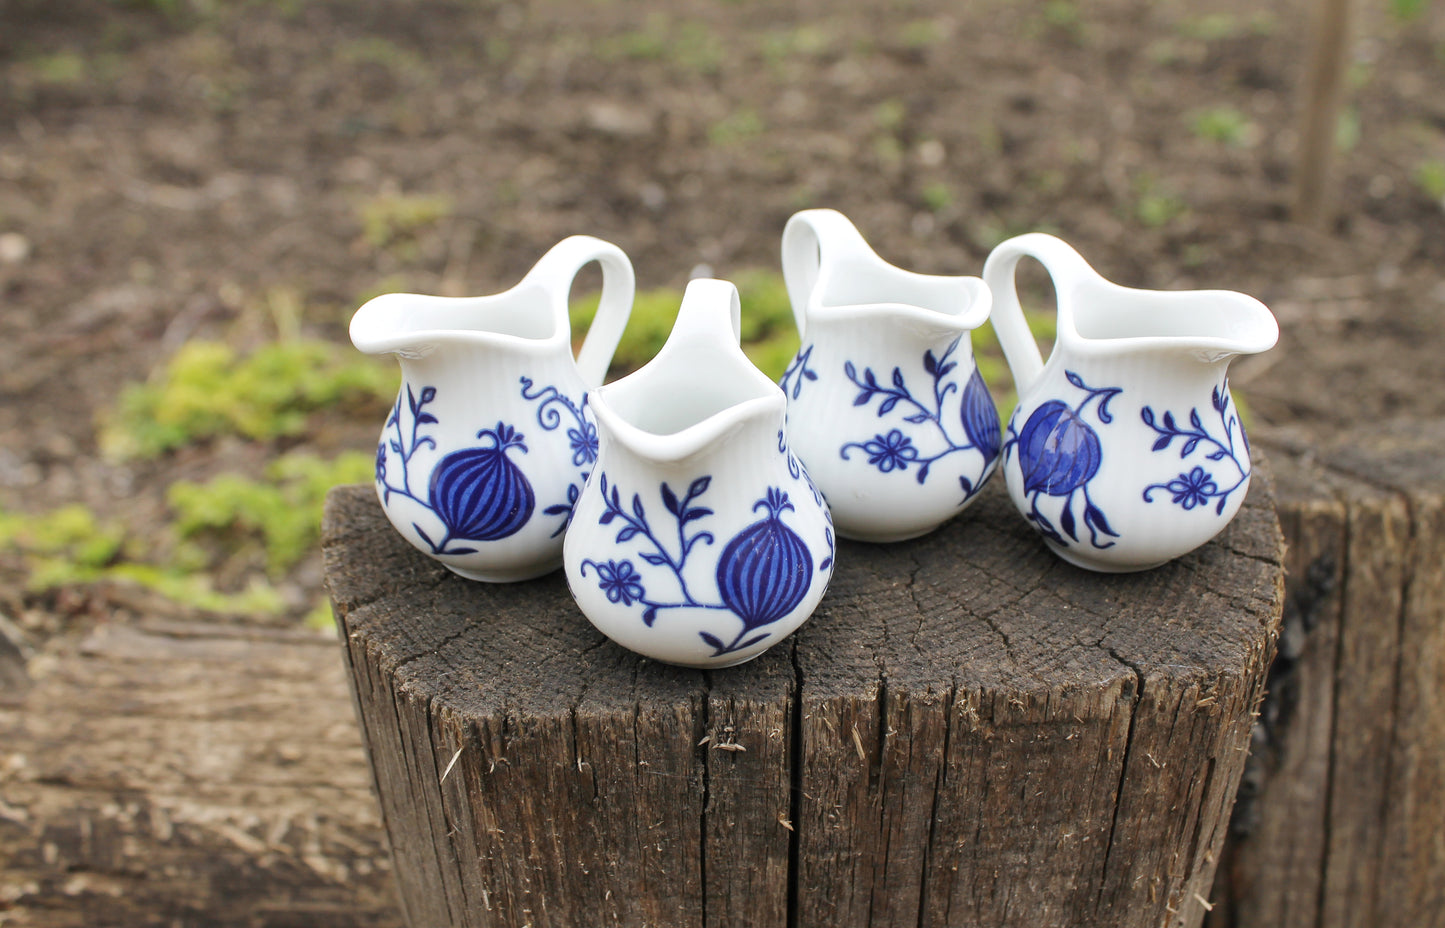 Set of 4 Vintage Porcelain souvenir mini jugs - made in Germany - gift mini jugs - 1980-1990s